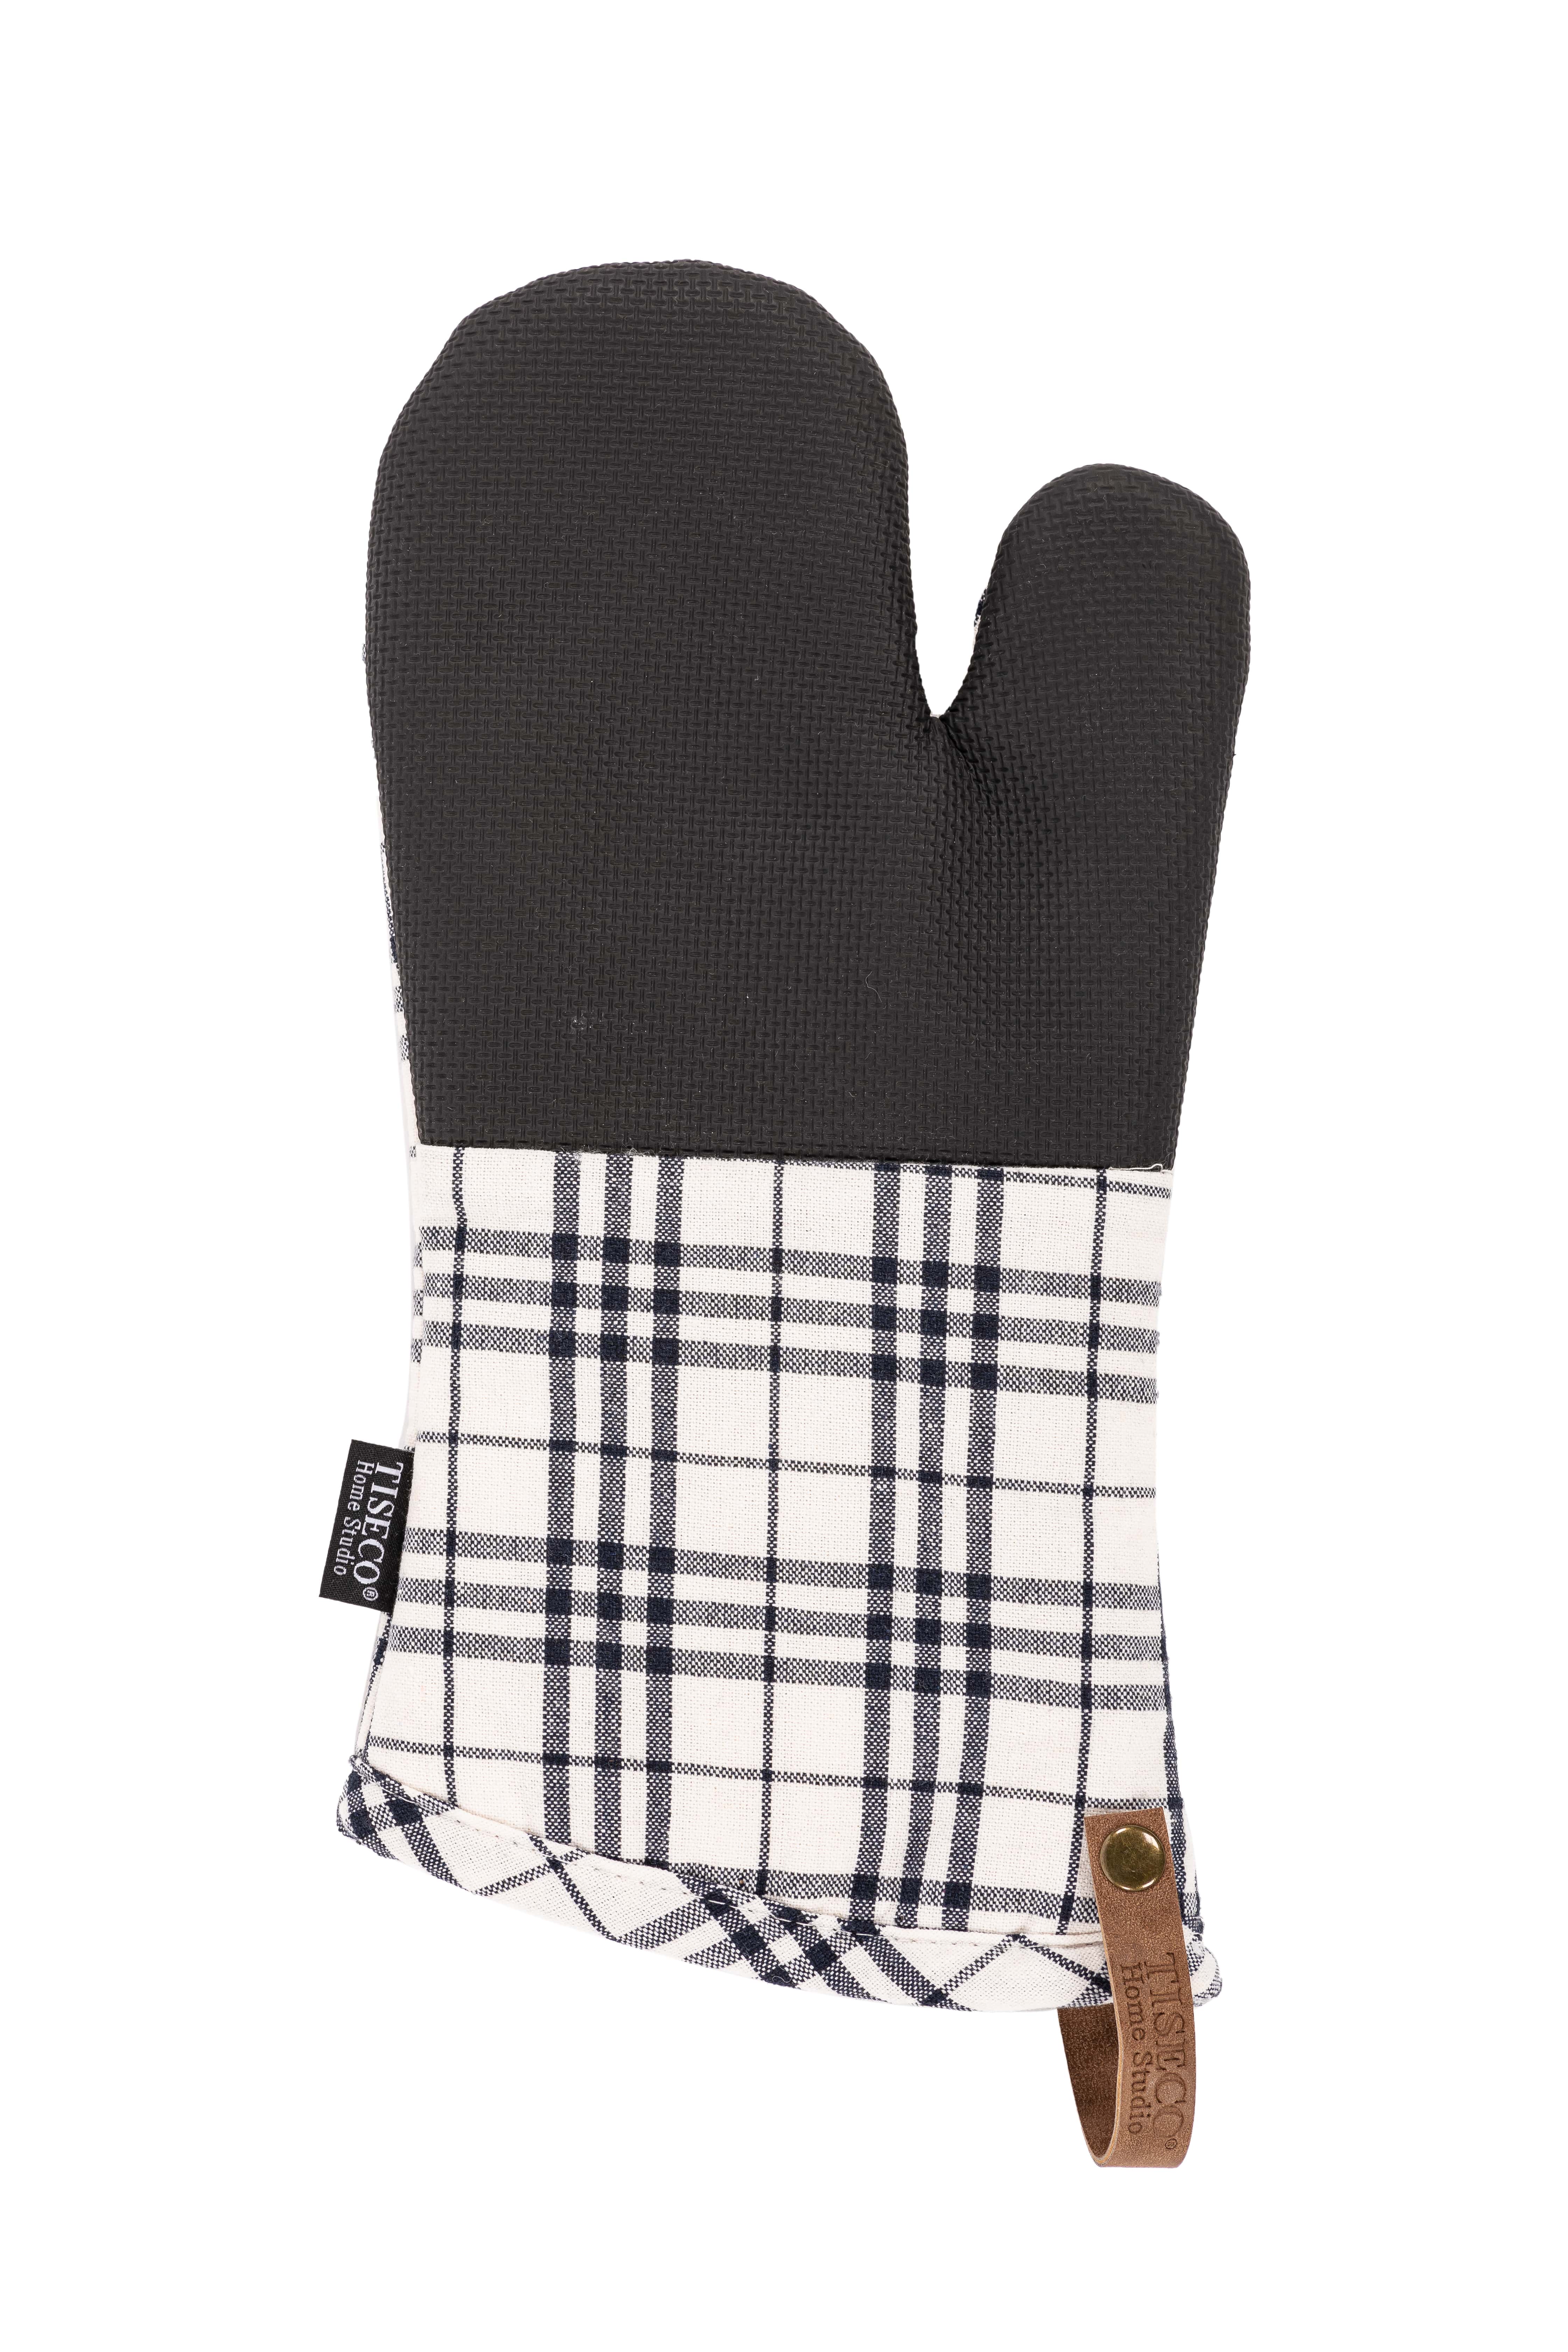 Oven glove (1R + 1L) SHERLOCK Checker, 17x33cm, black